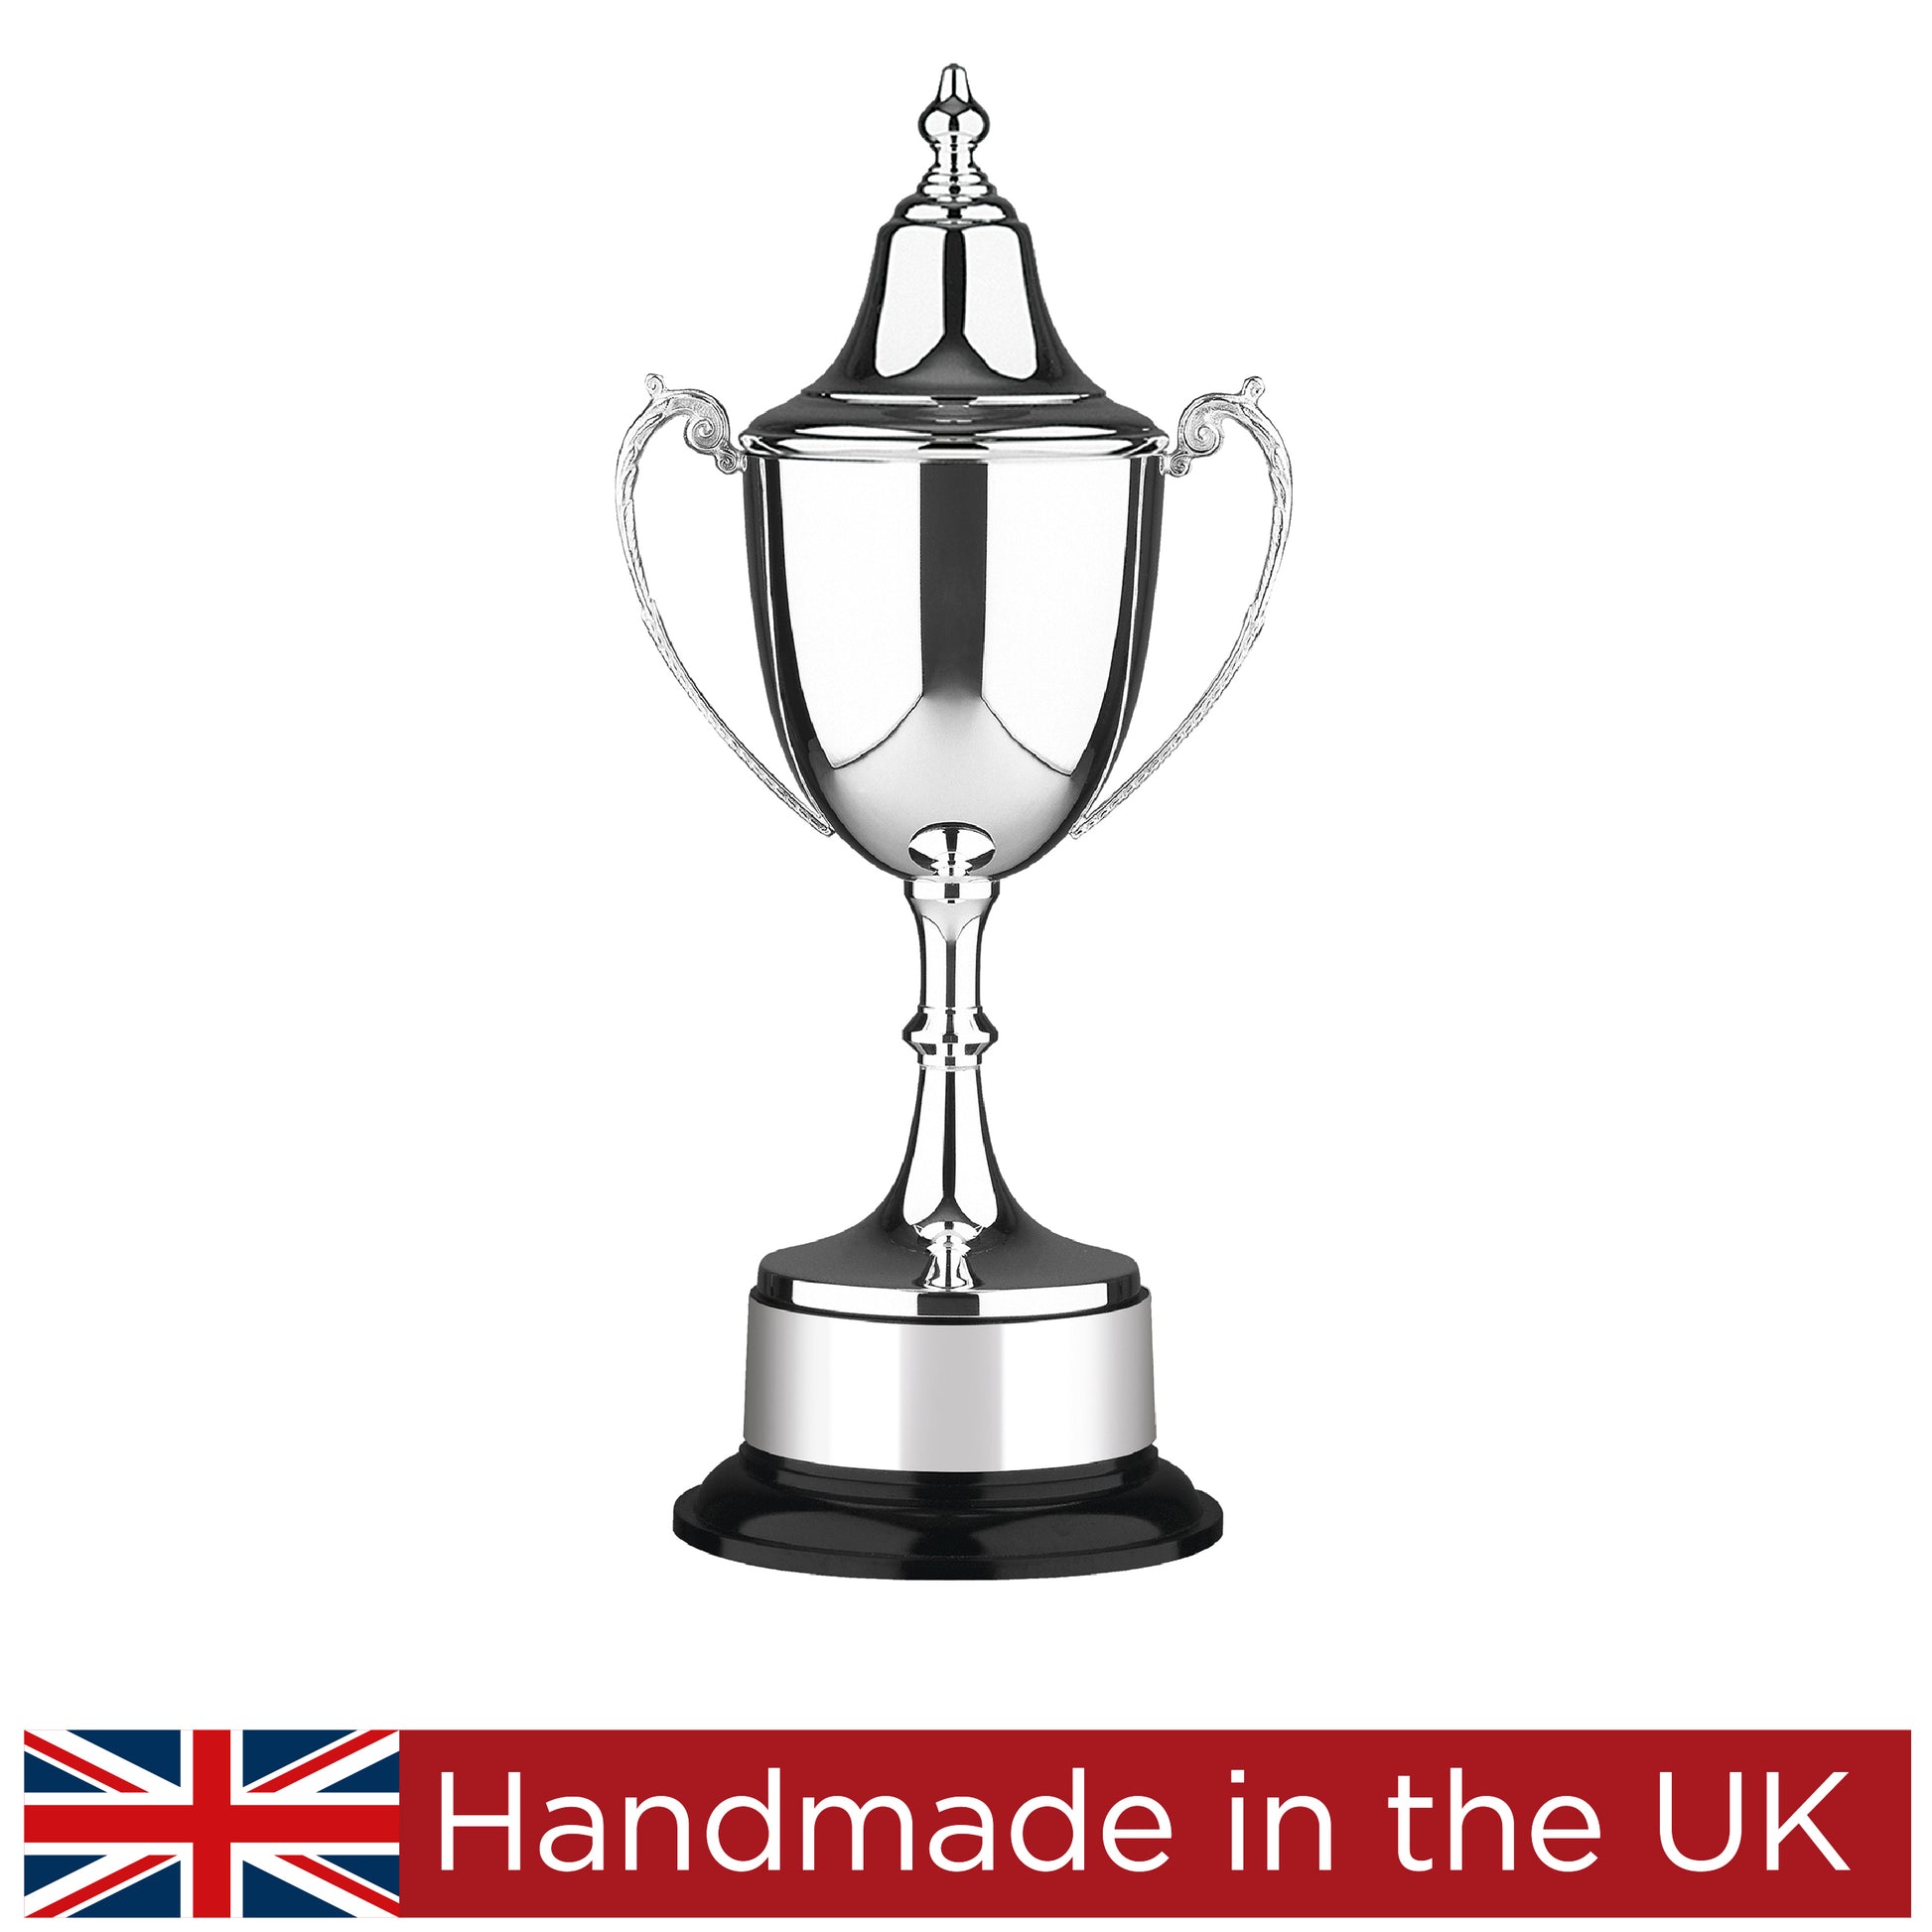 Prestigious Cup - Staffordshire Handmade Cup by Gaudio Awards